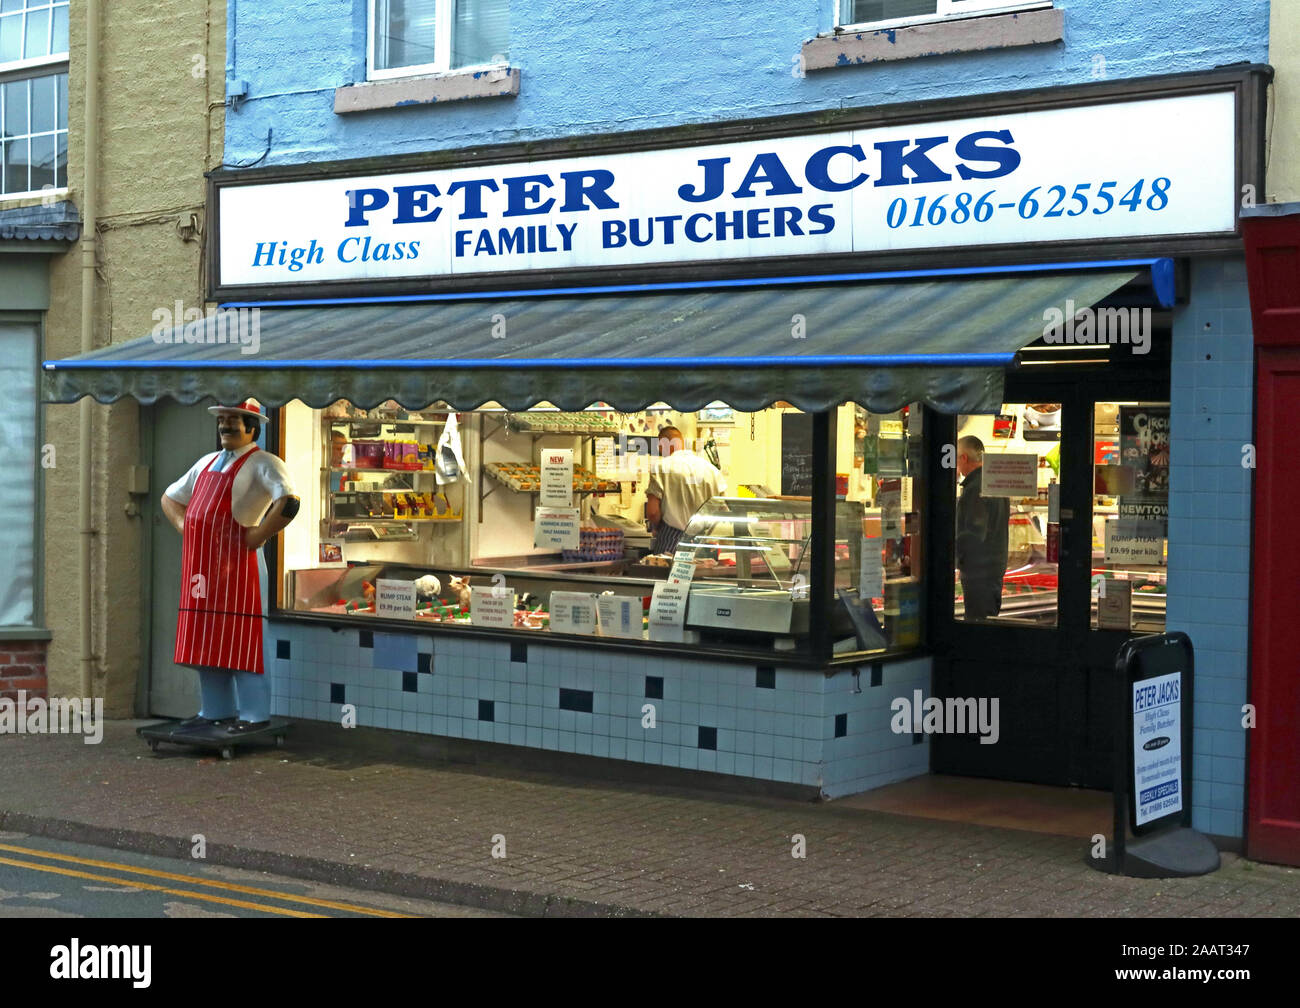 Peter Jacks High Class Family Butcher 01686-625548, 6 Market St, Newtown, Powys, Wales, SY16 2PQ Stock Photo